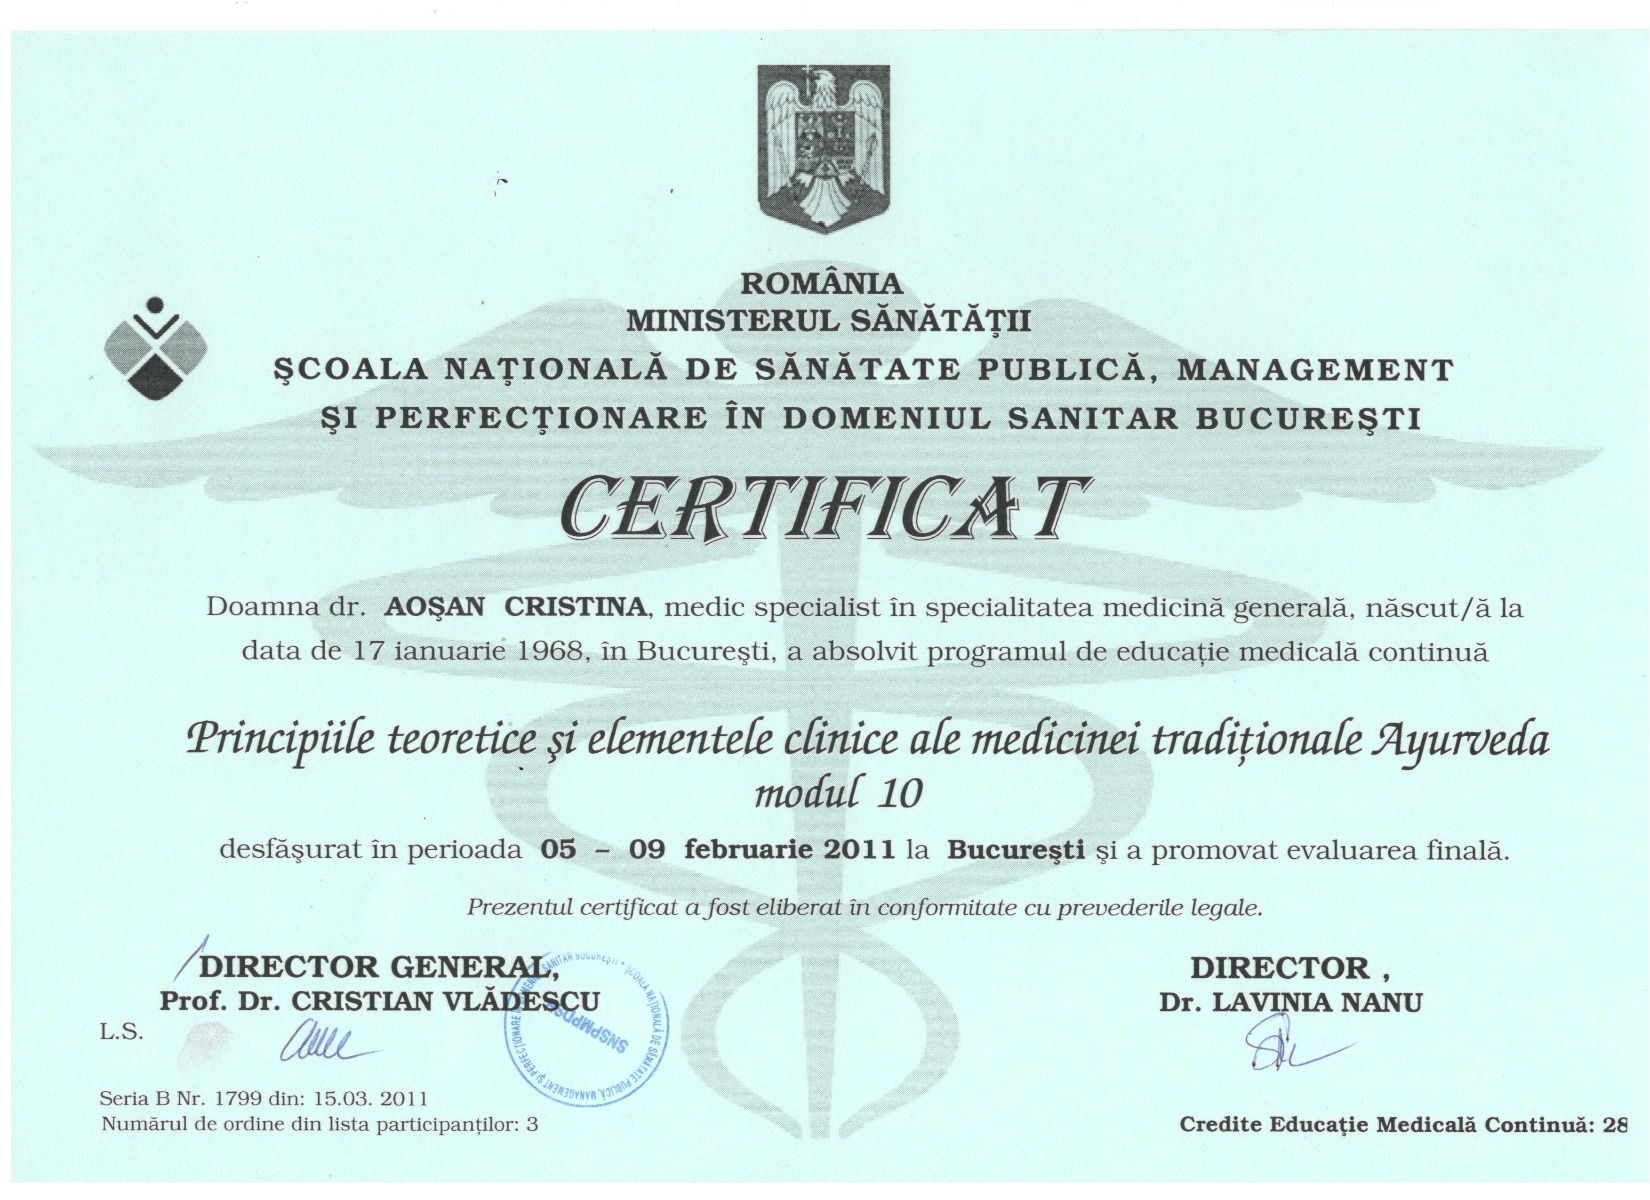 Certificat SNSP Ministerul Sanatatii, Ayurveda